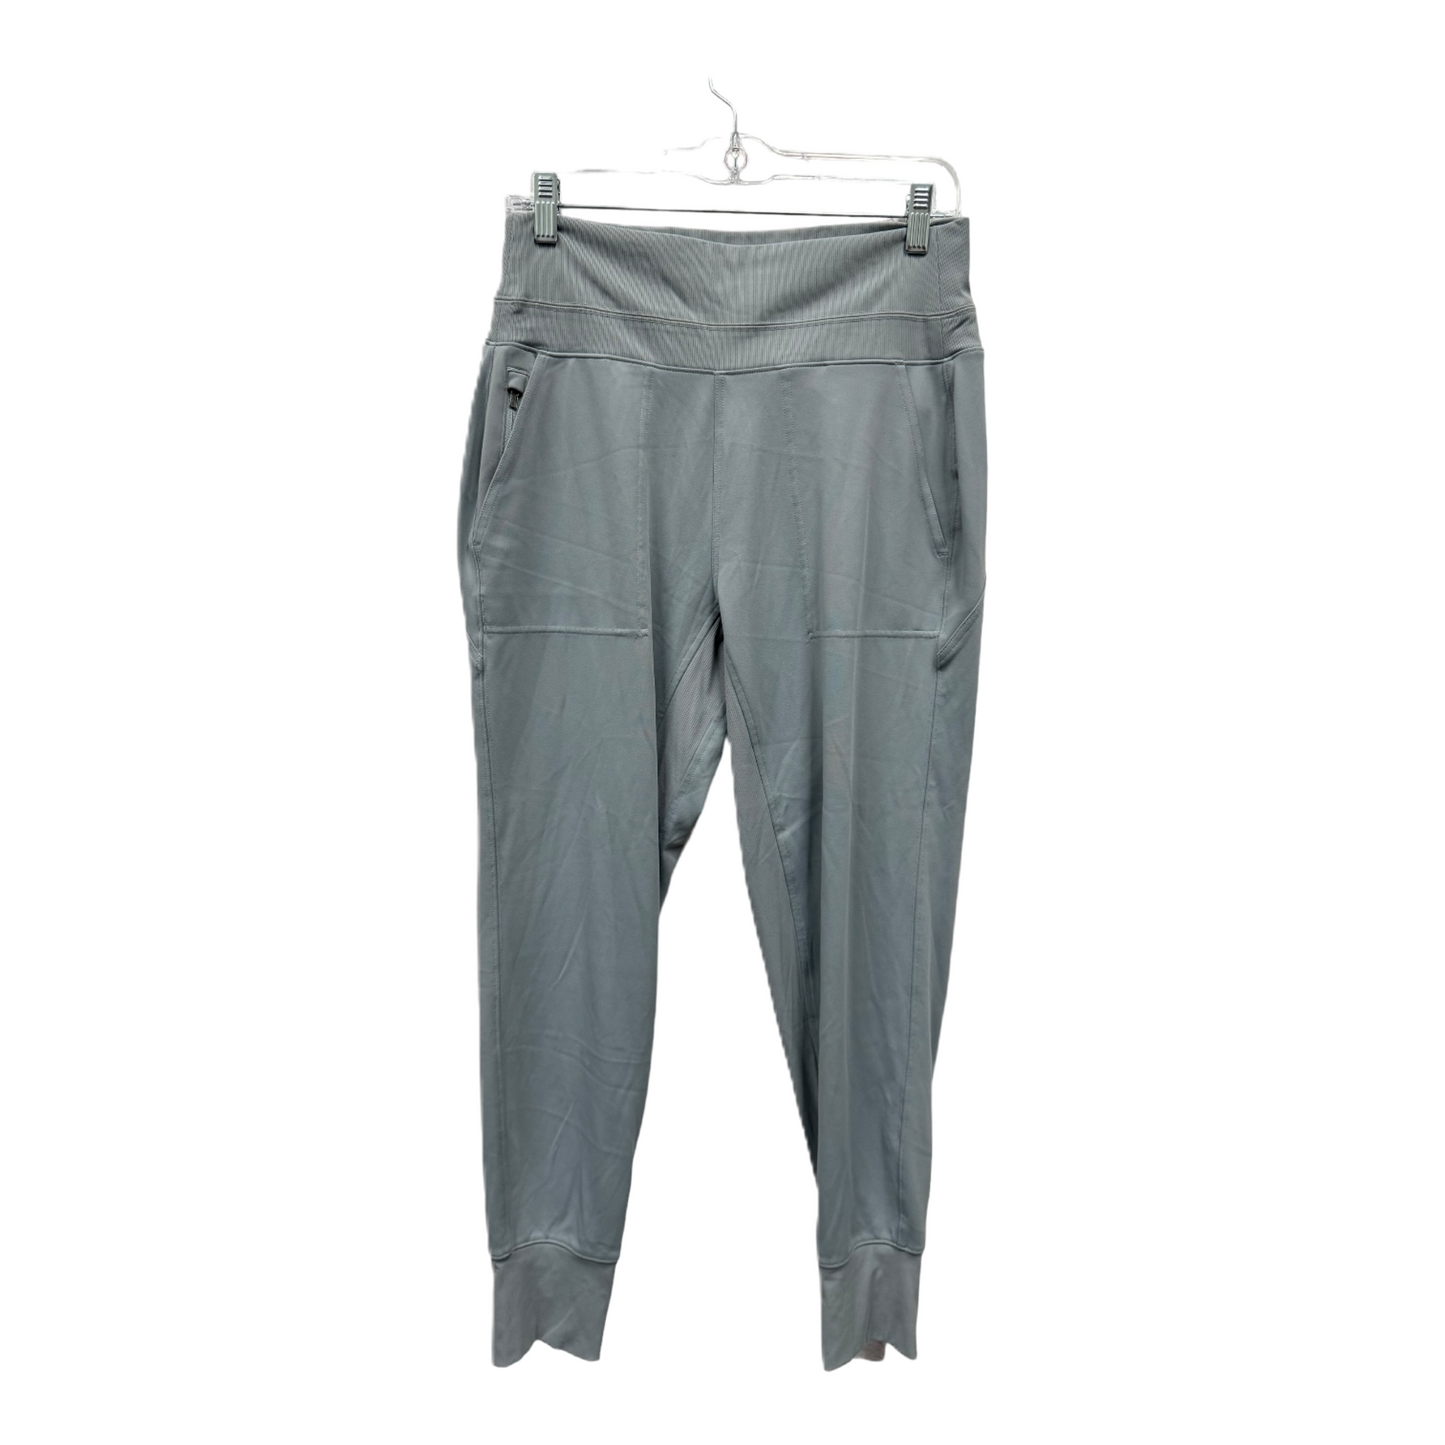 Grey Athletic Pants By Athleta, Size: M